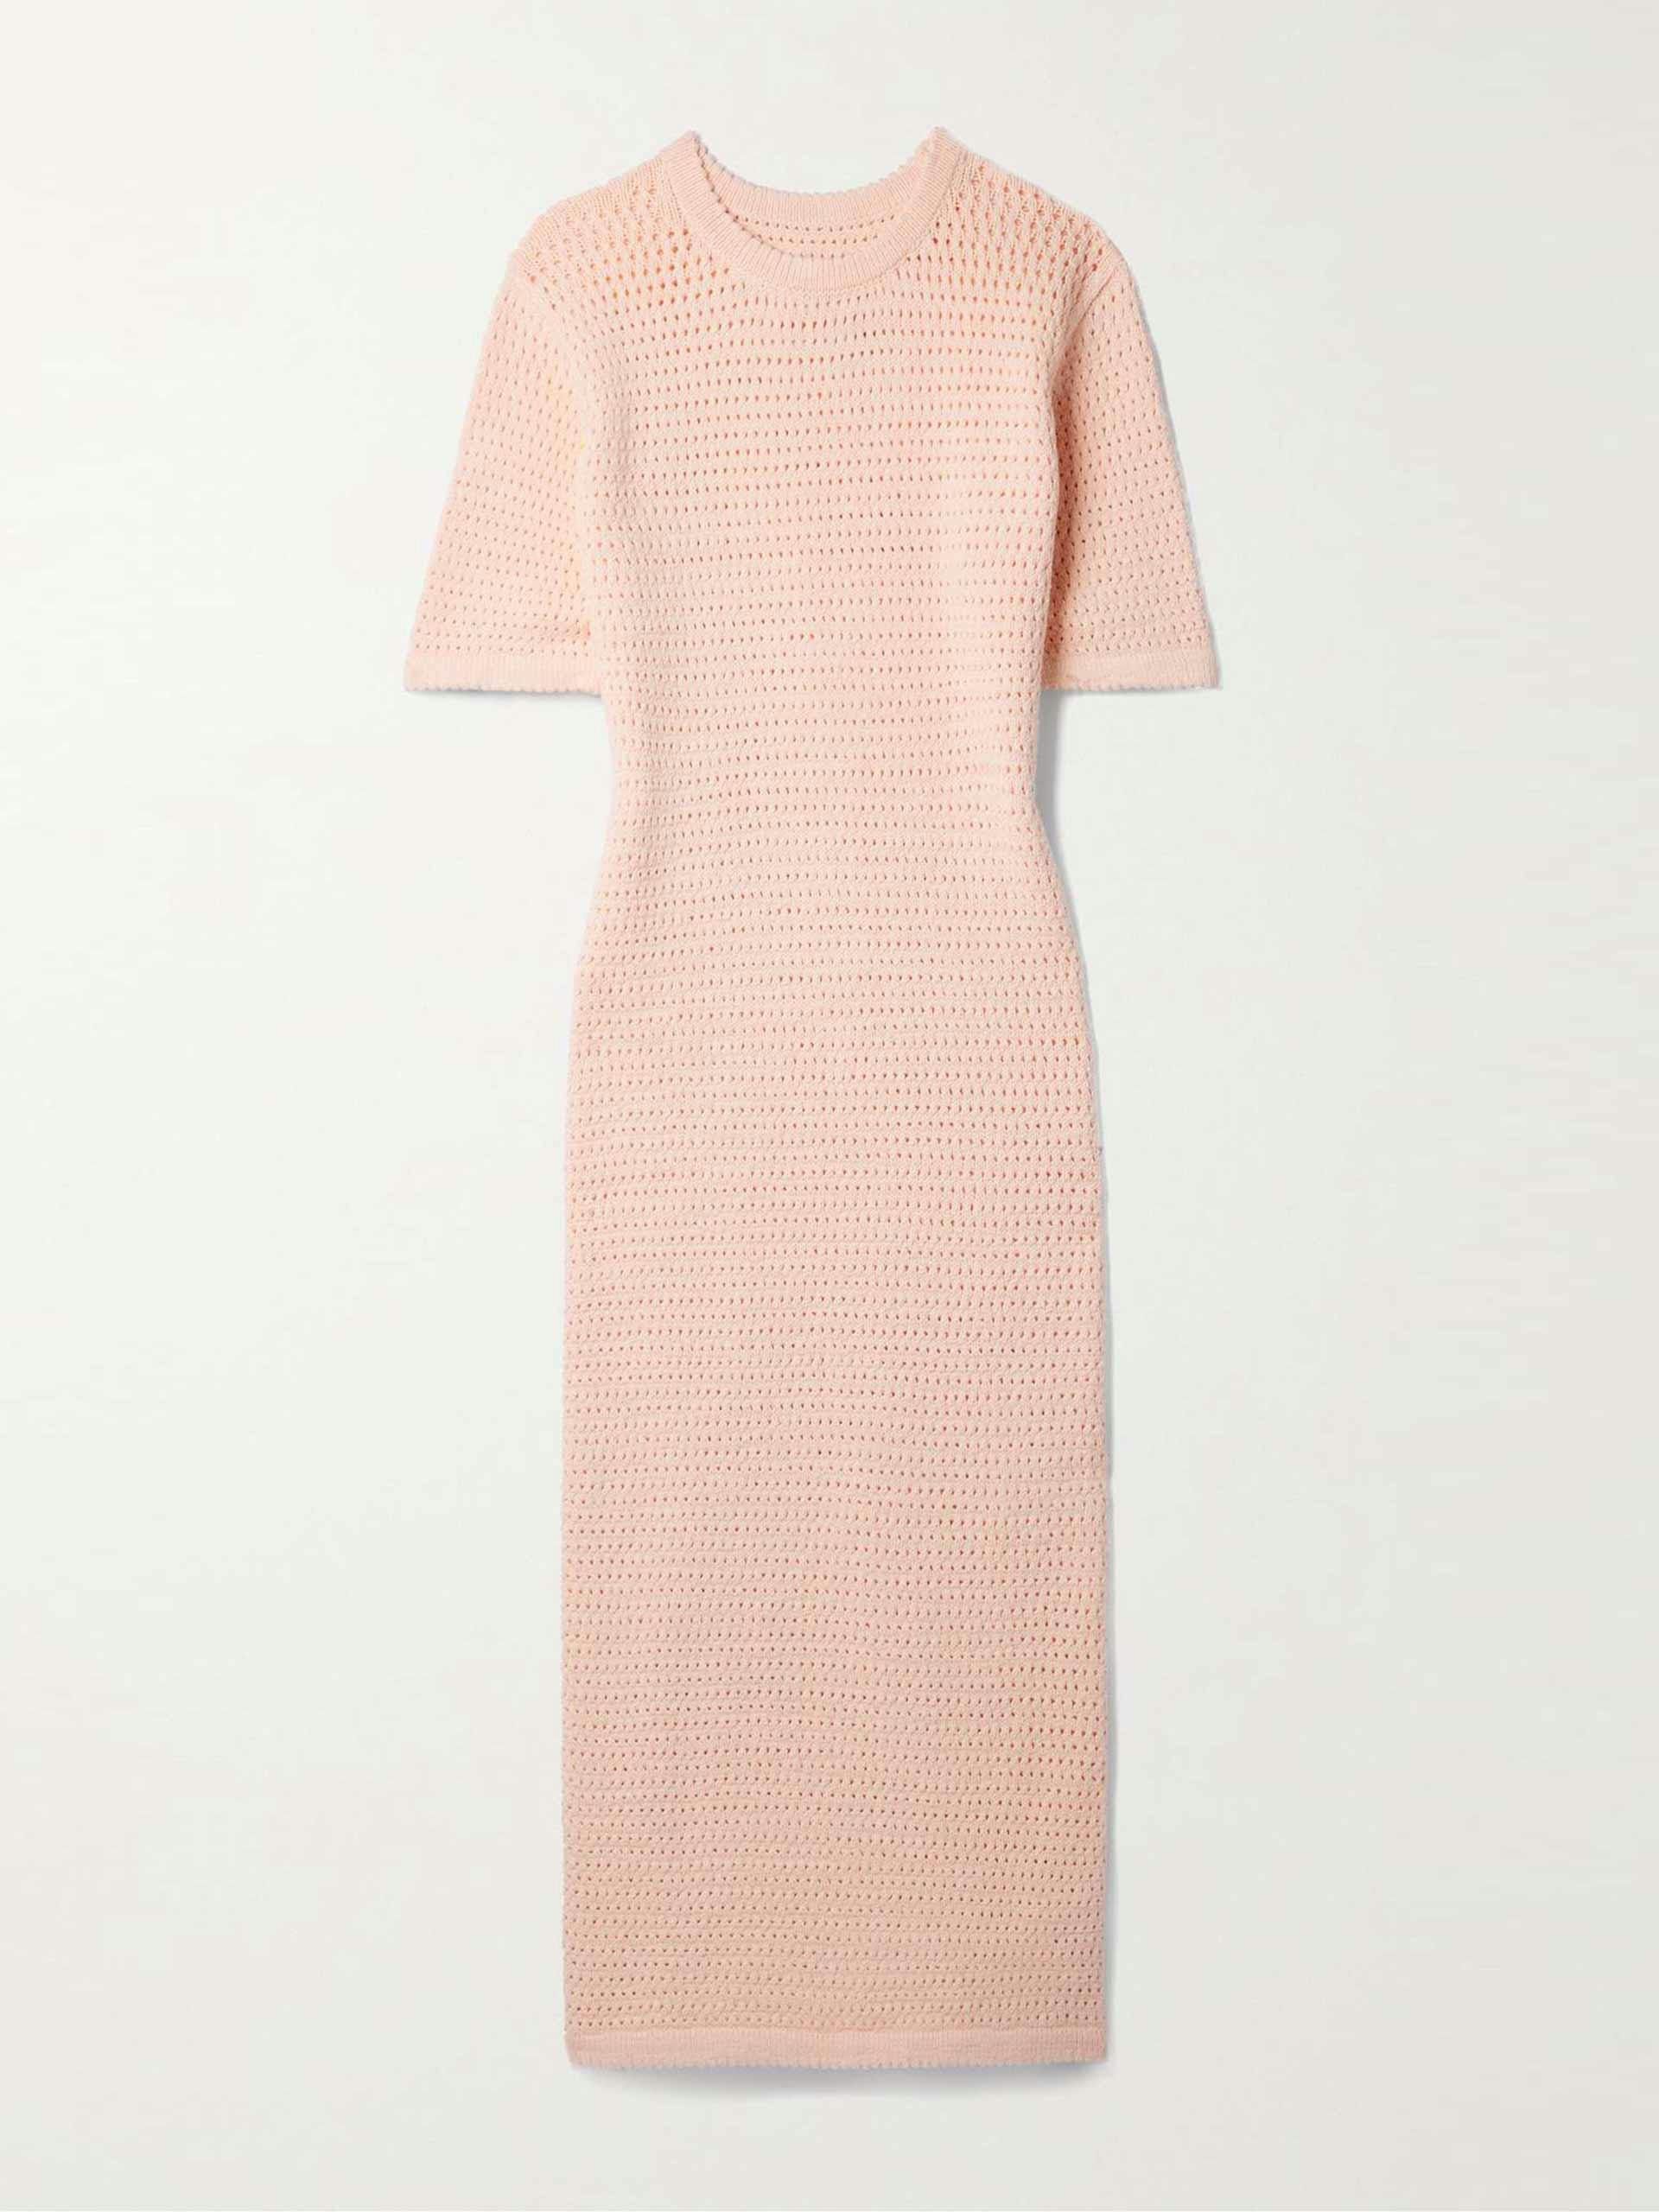 Crocheted pink midi dress